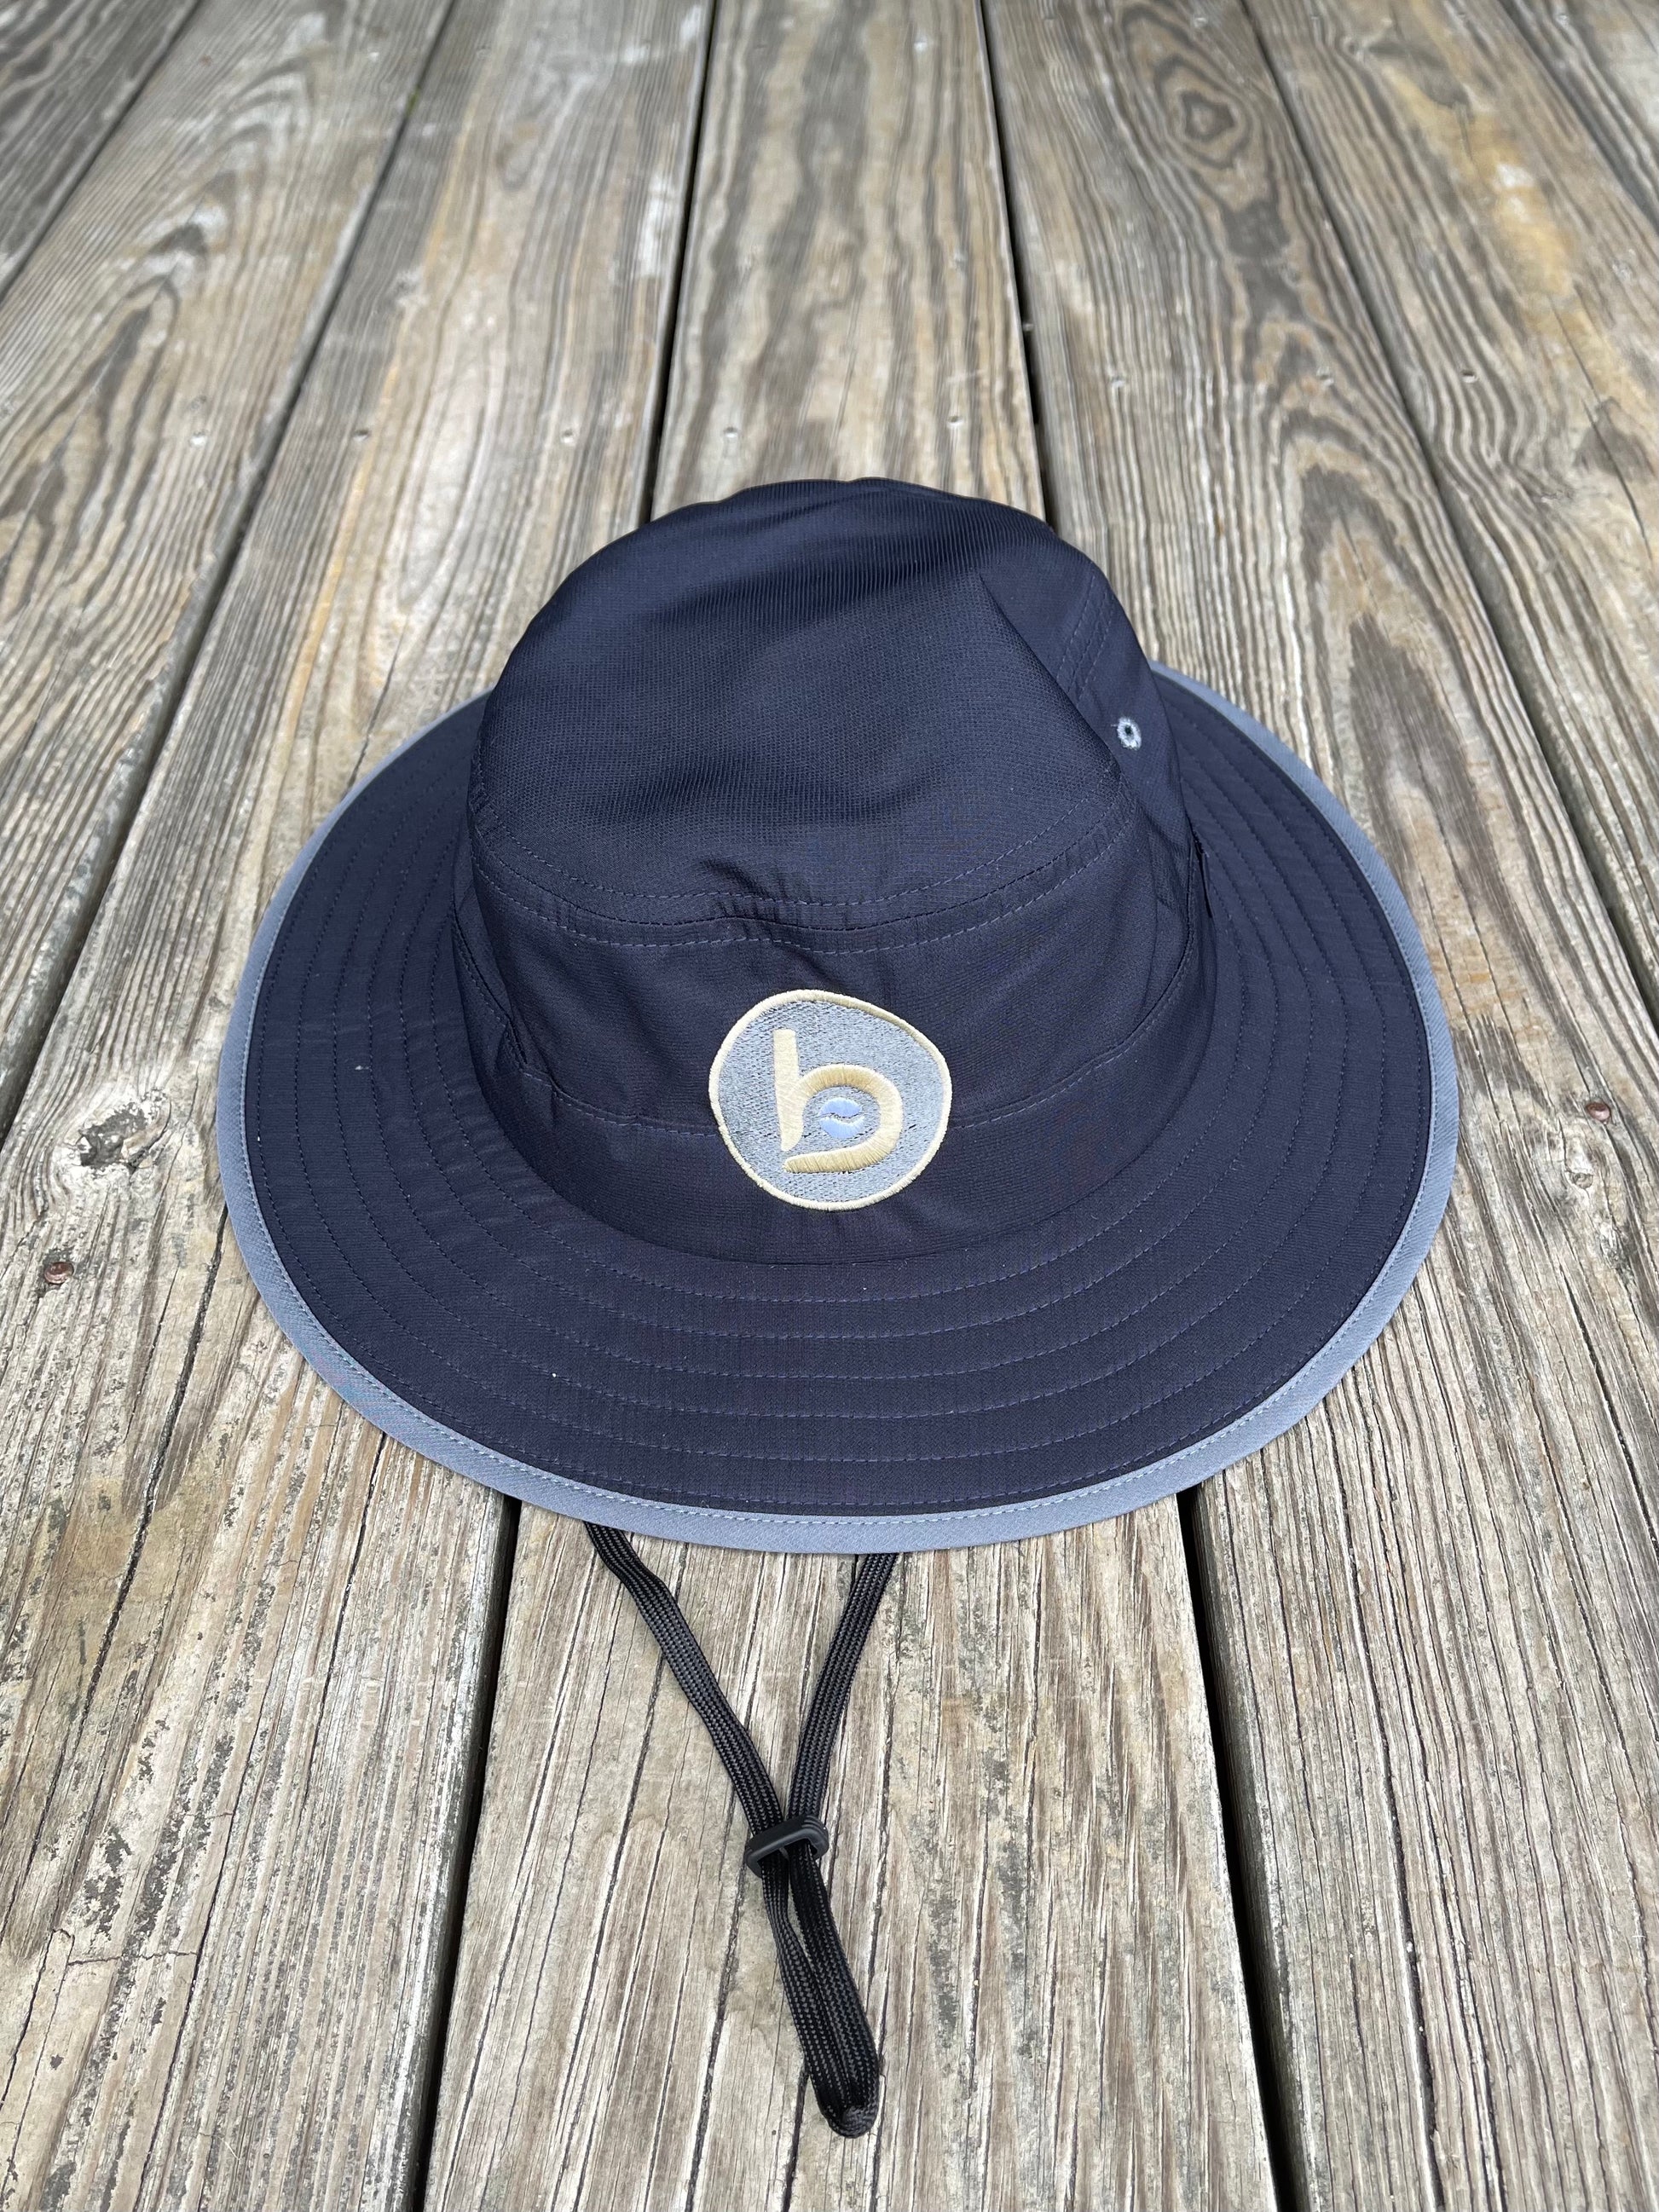 logo) Bradley hat b (circle Bucket/Boonie Baseball